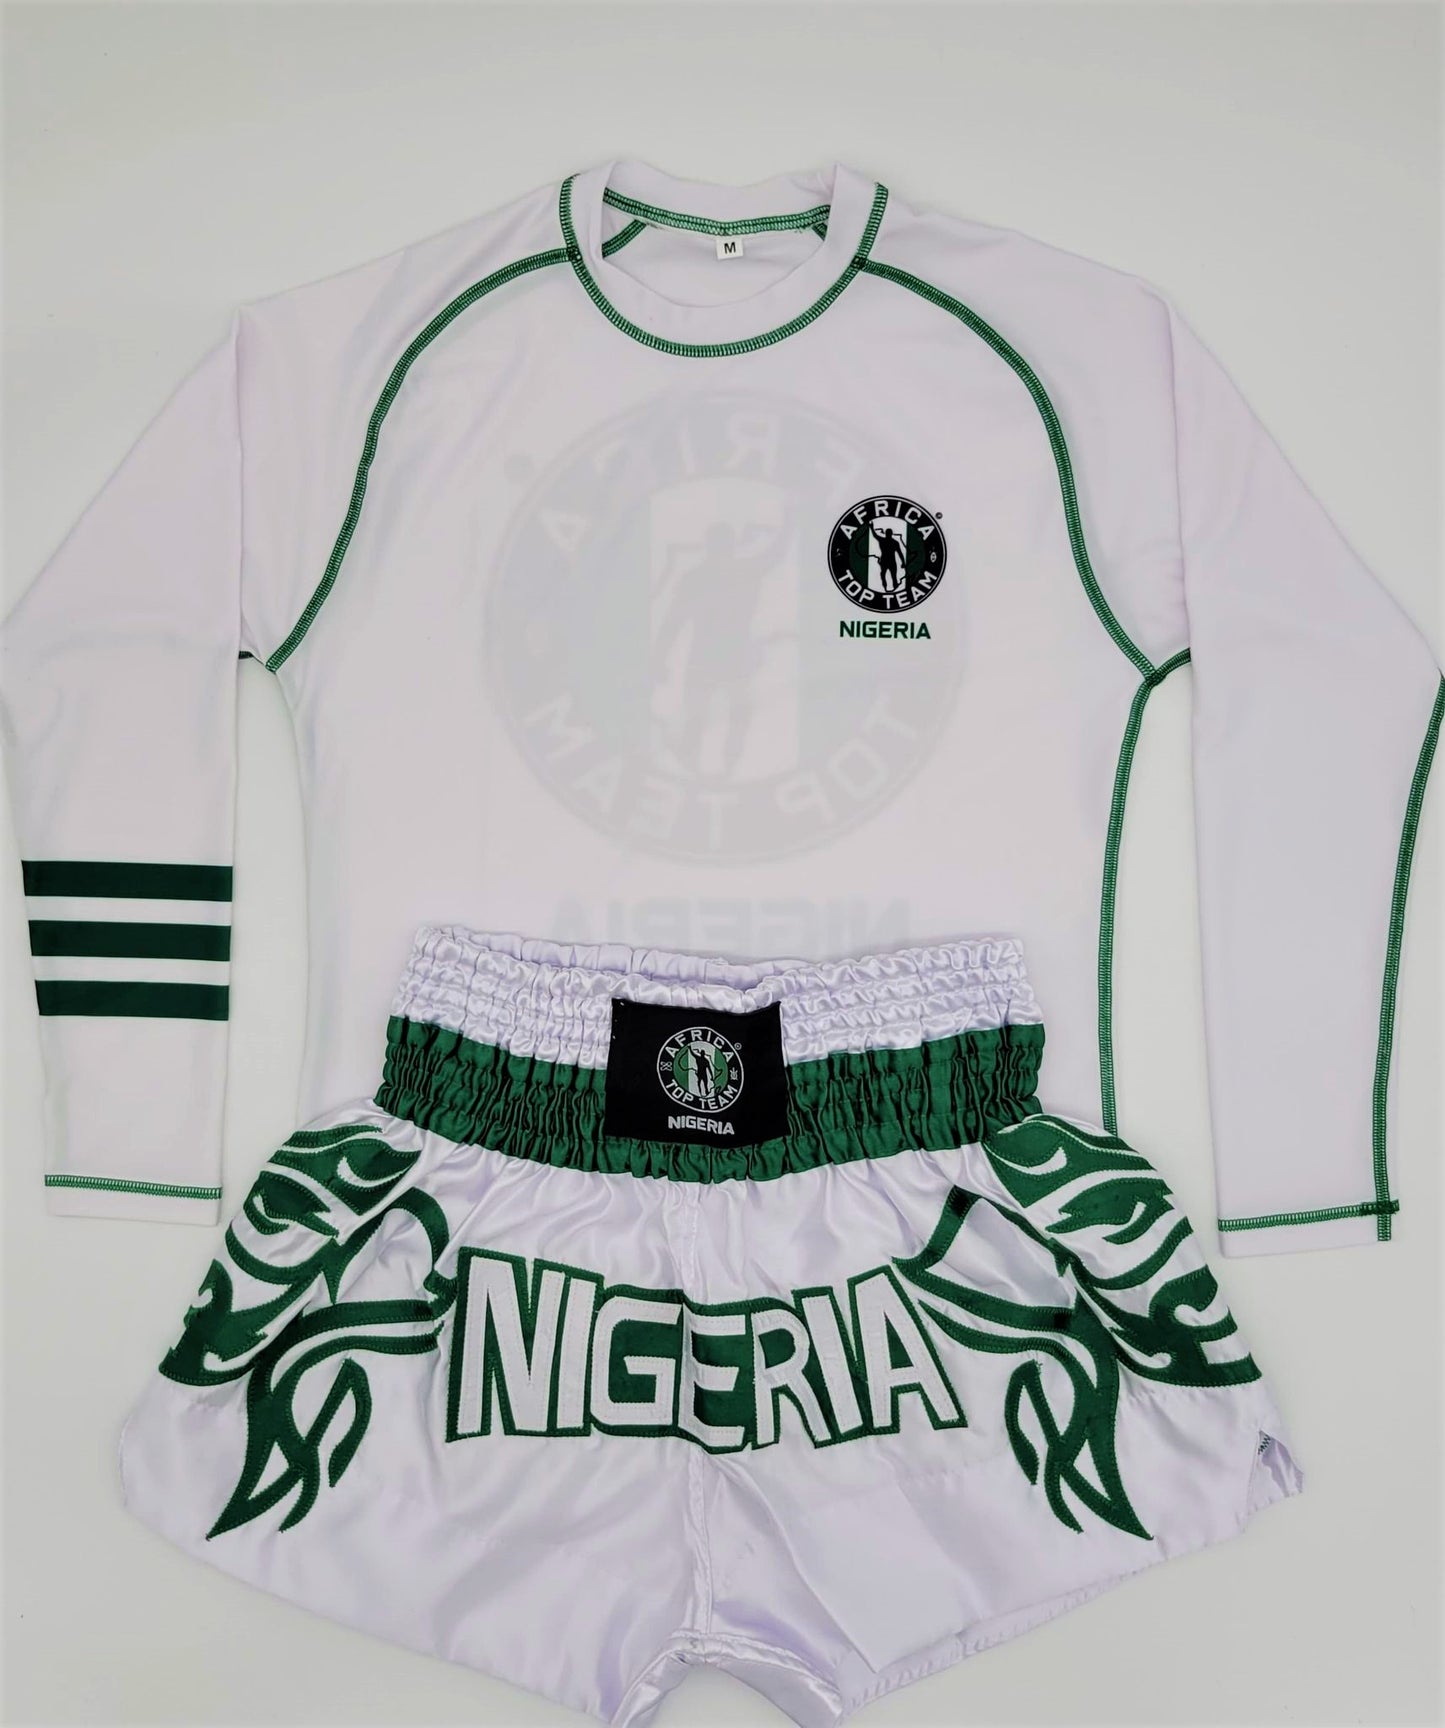 Africa Top Team Nigeria White/Green Rash guard and Muay Thai Set    Boxing, MMA